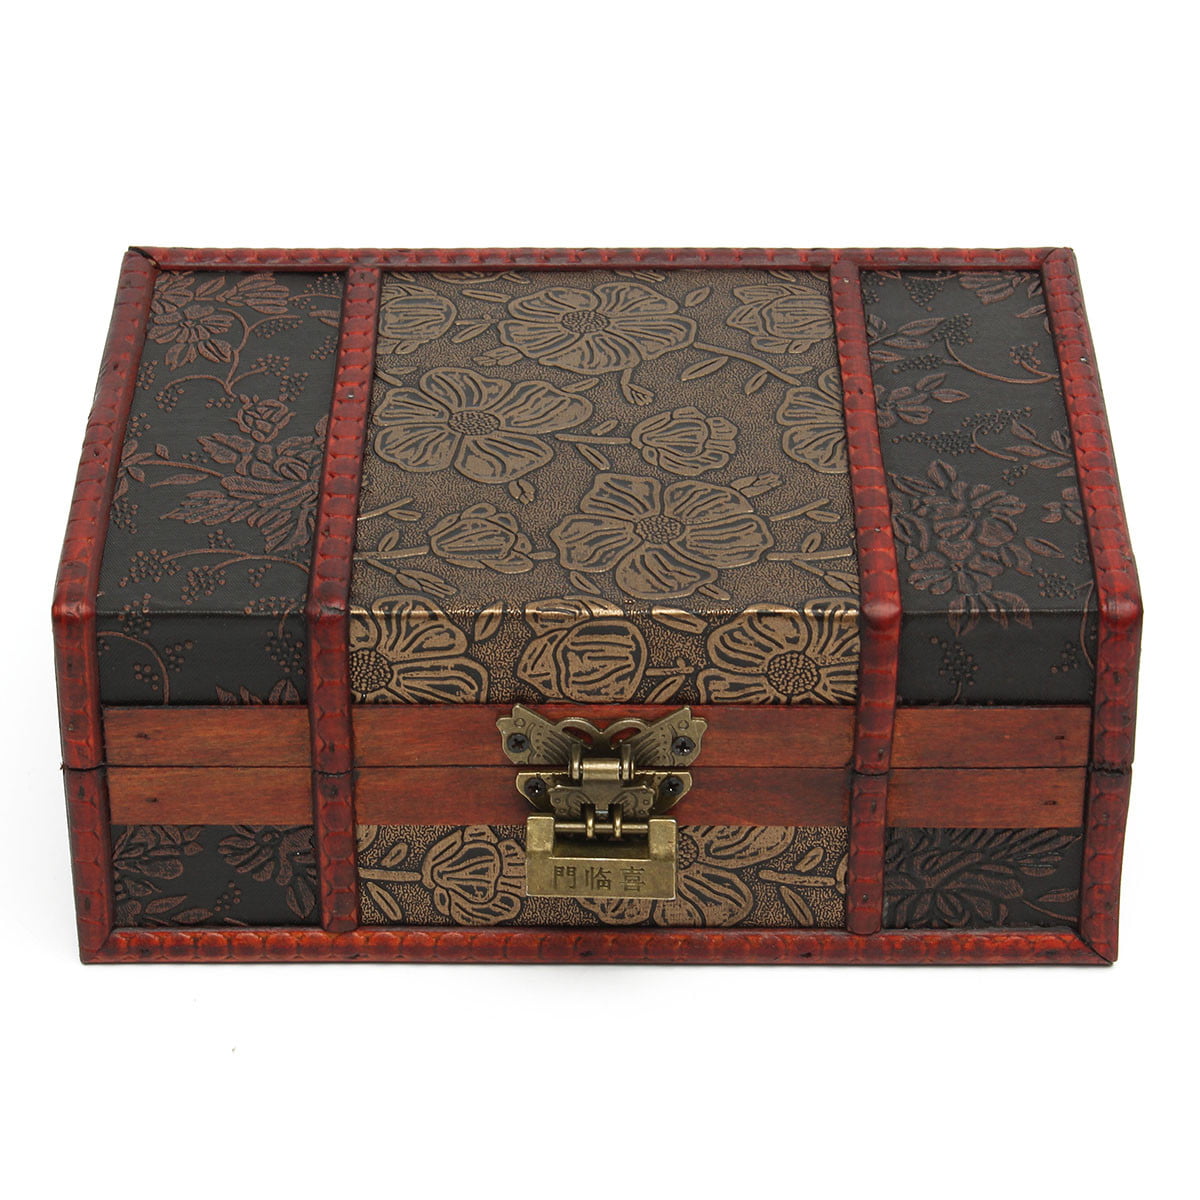 Luckyfine - Handmade Decorative Wooden Jewelry Box With Free Lock & Key